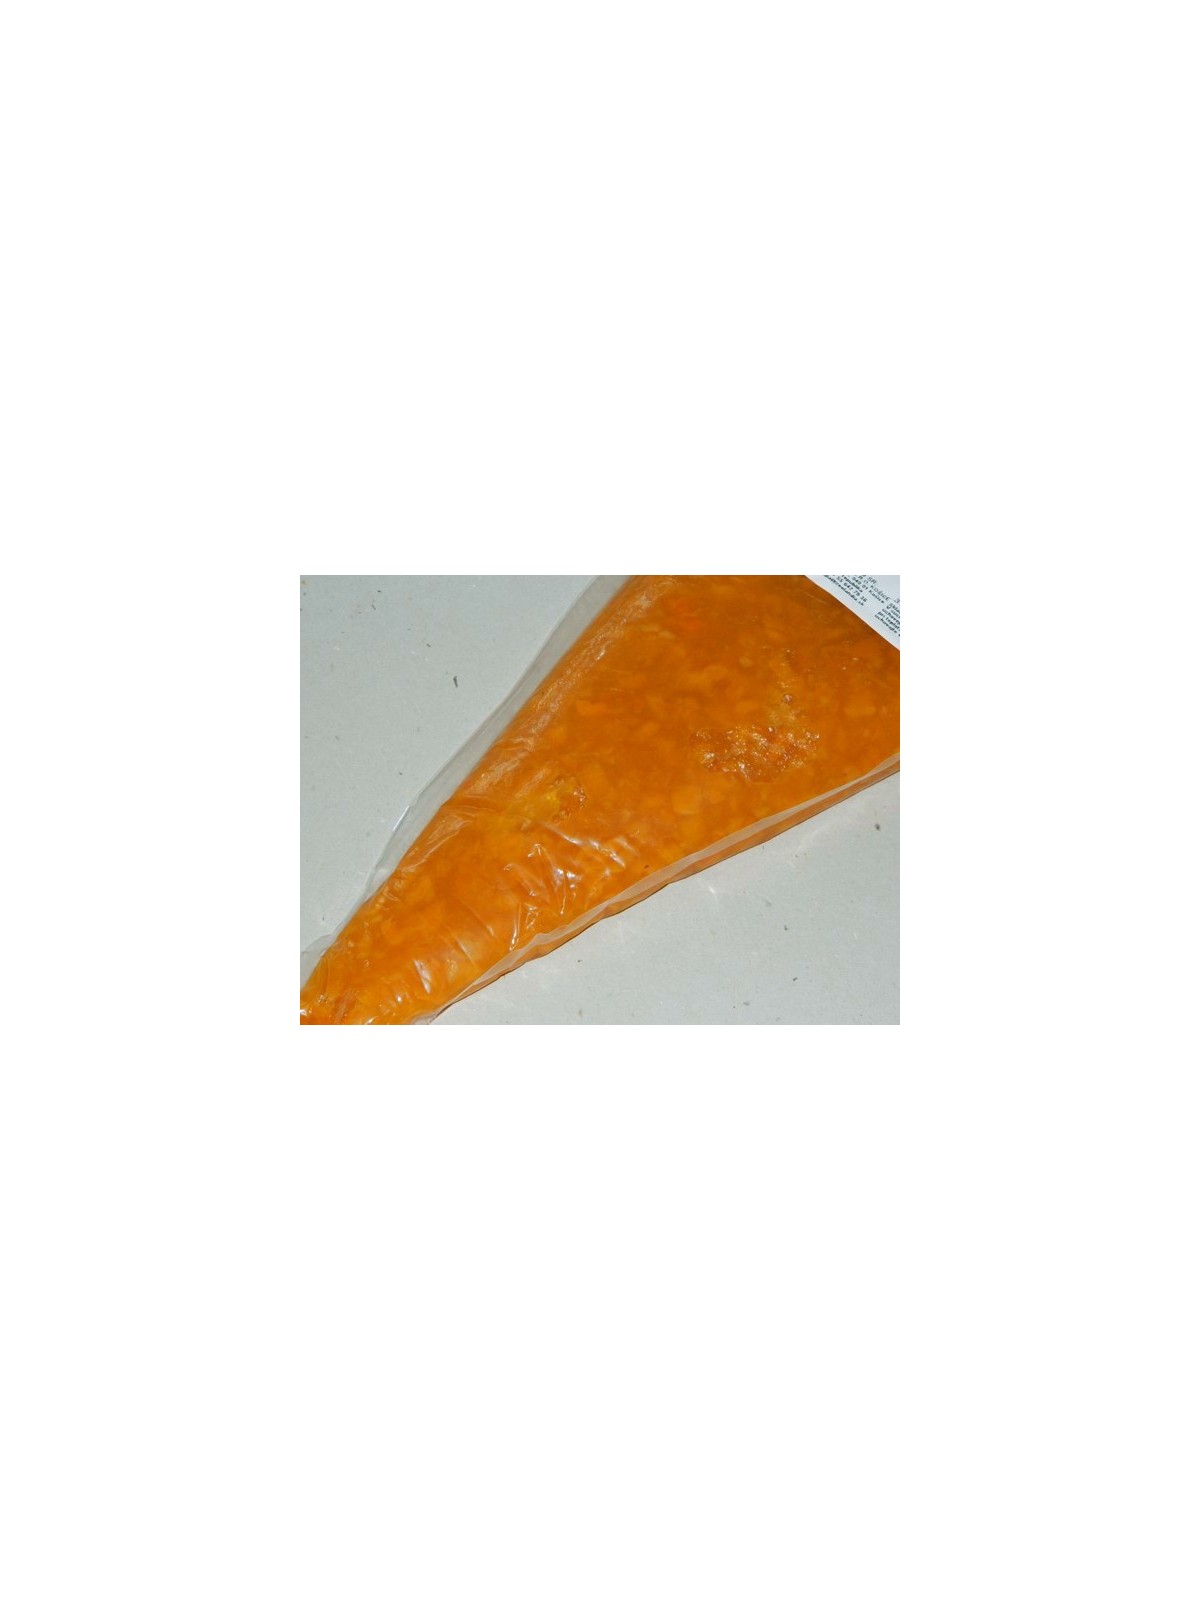 Meruňkový gel - ovocná náplň - 1kg